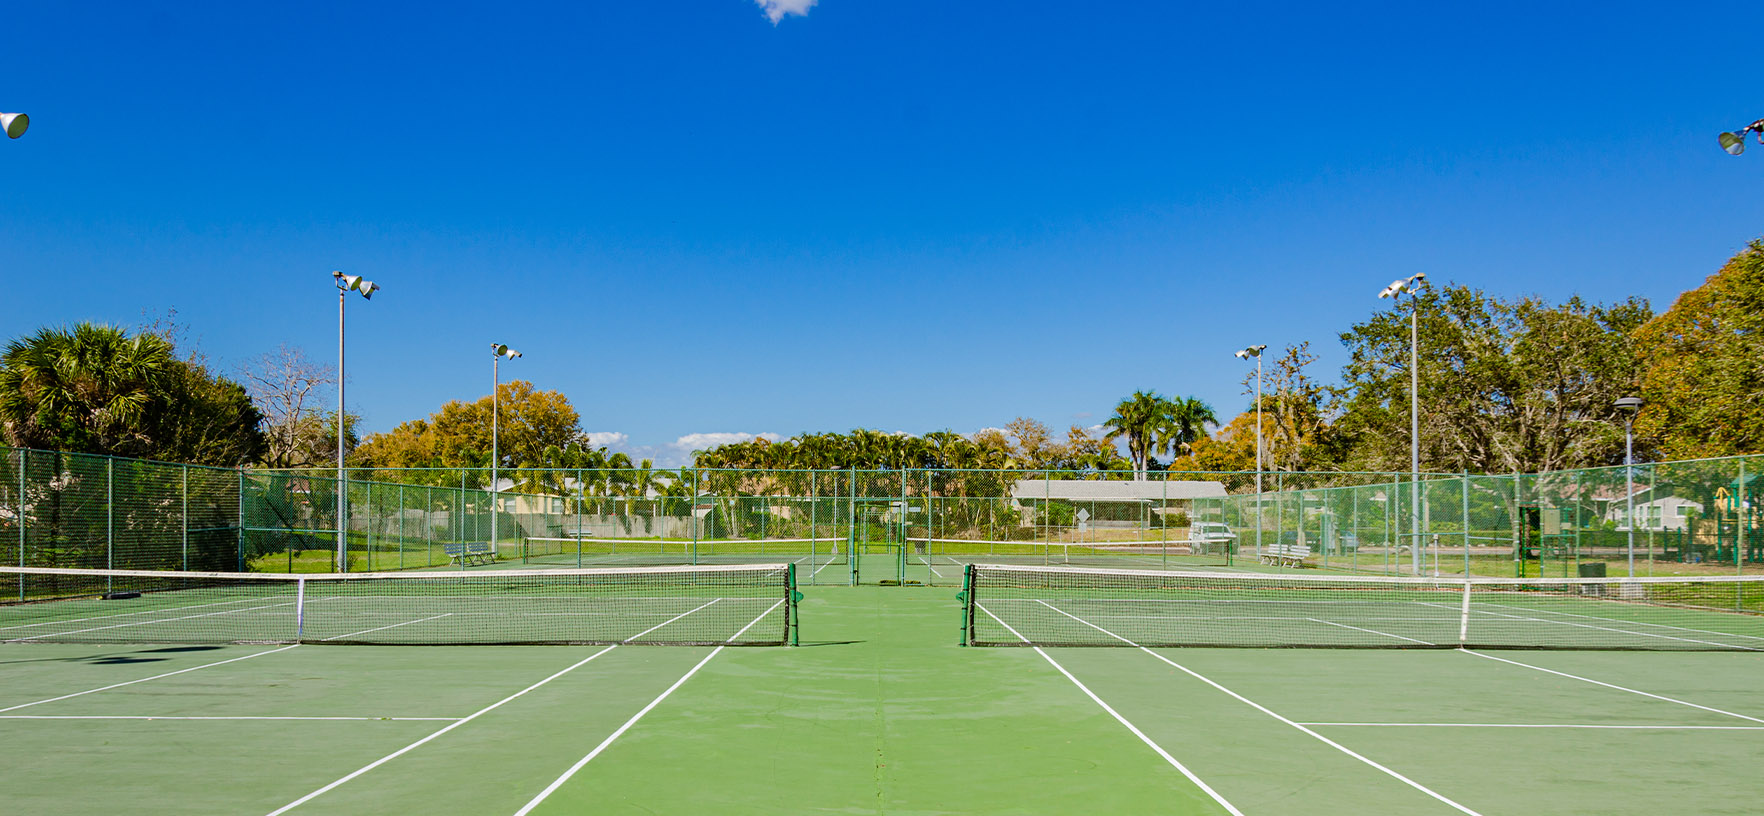 Denver Park tennis court